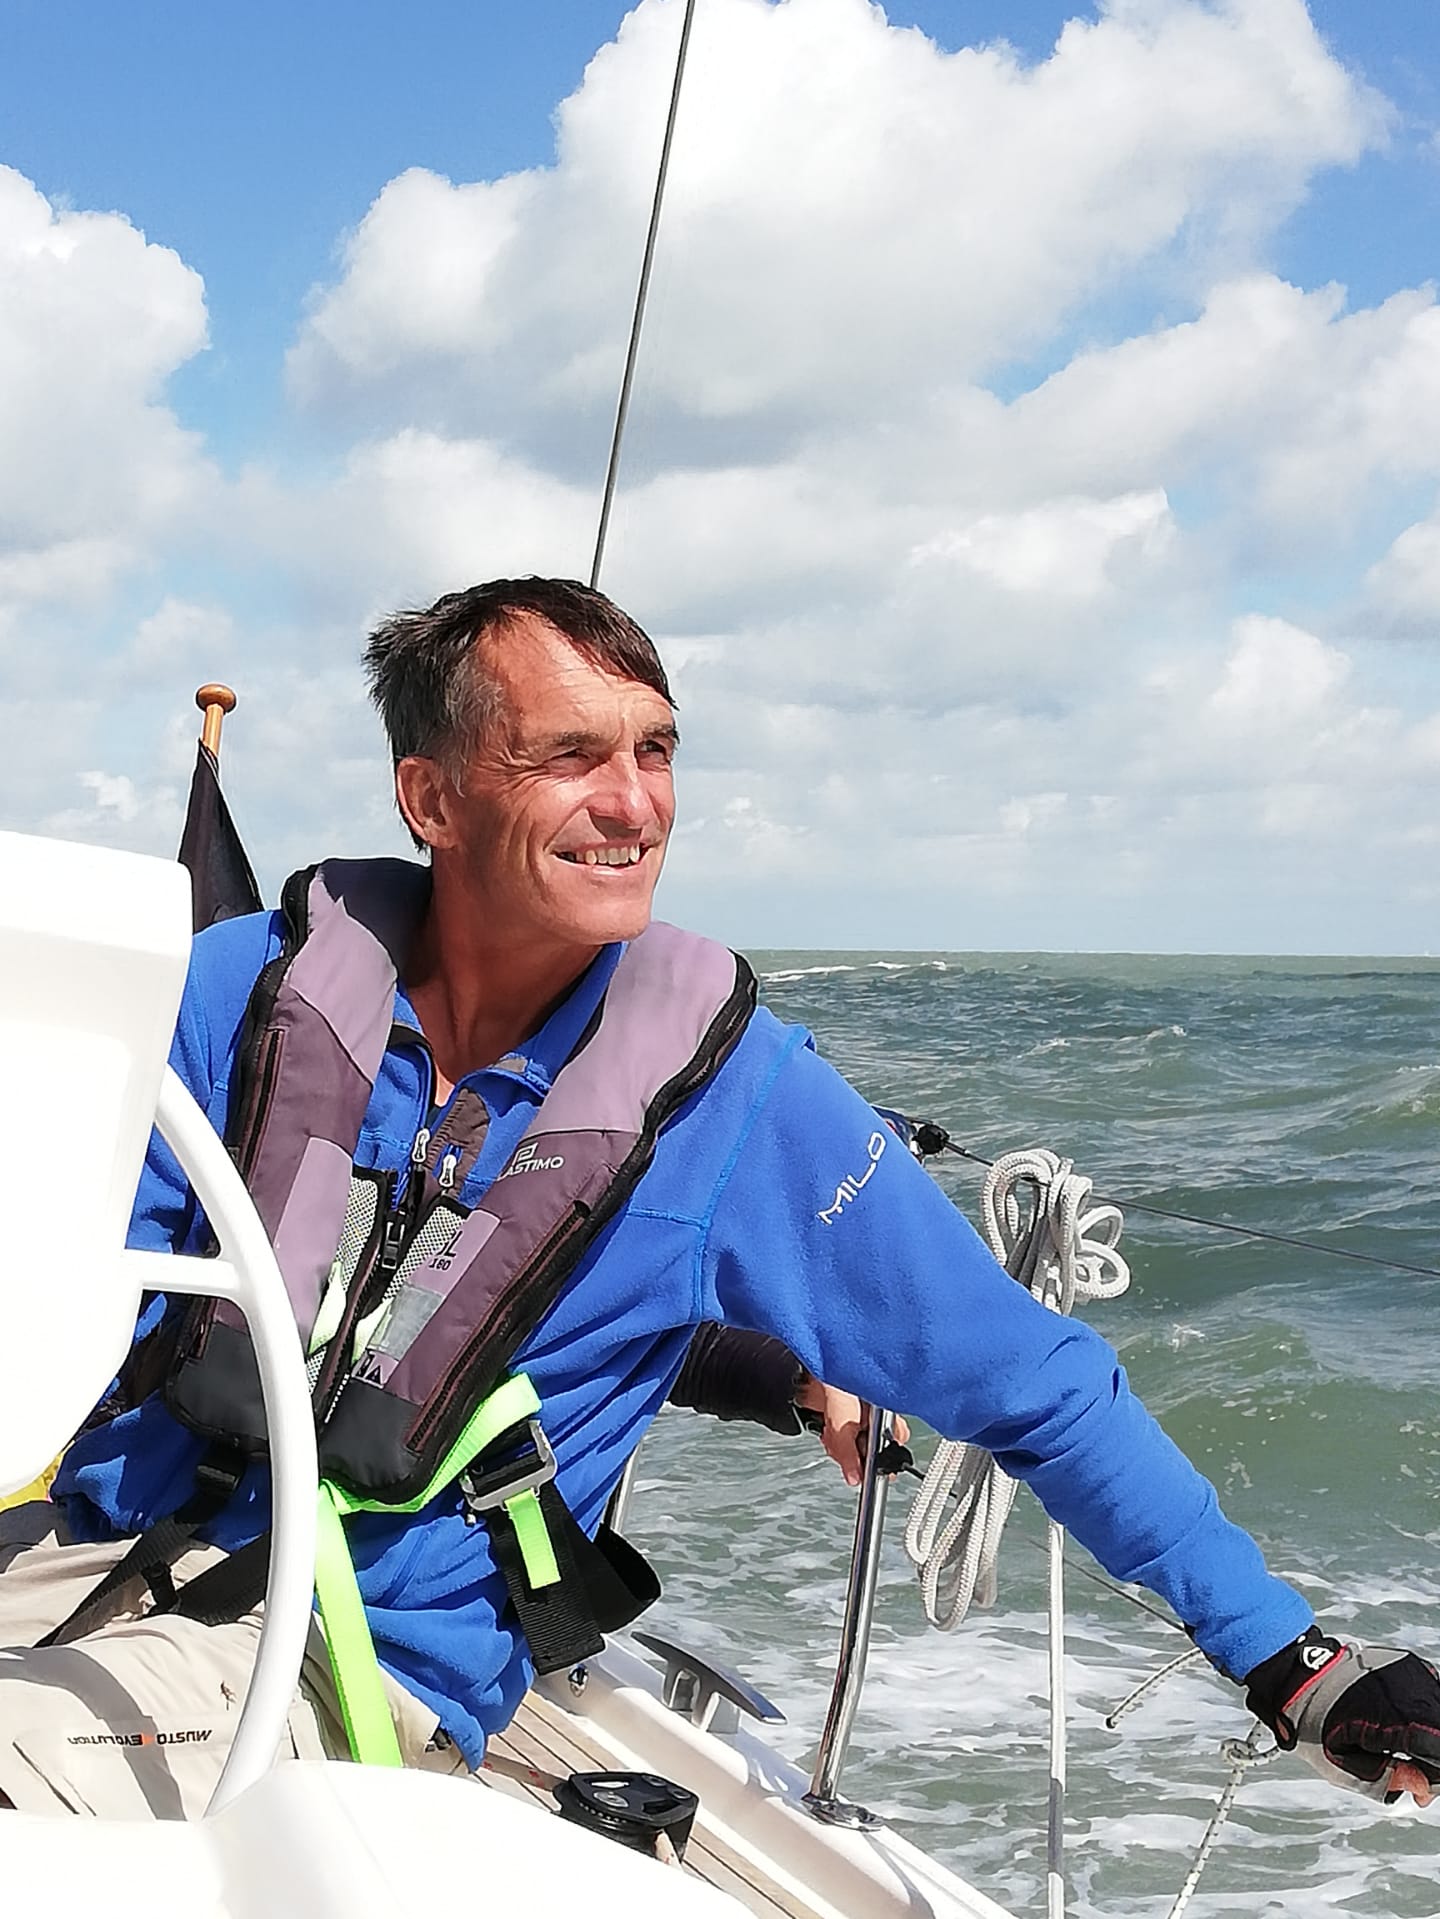 Skipper Didier Fun sail Events teambuilding and initiation fleet & confort magic sailing trip baptism